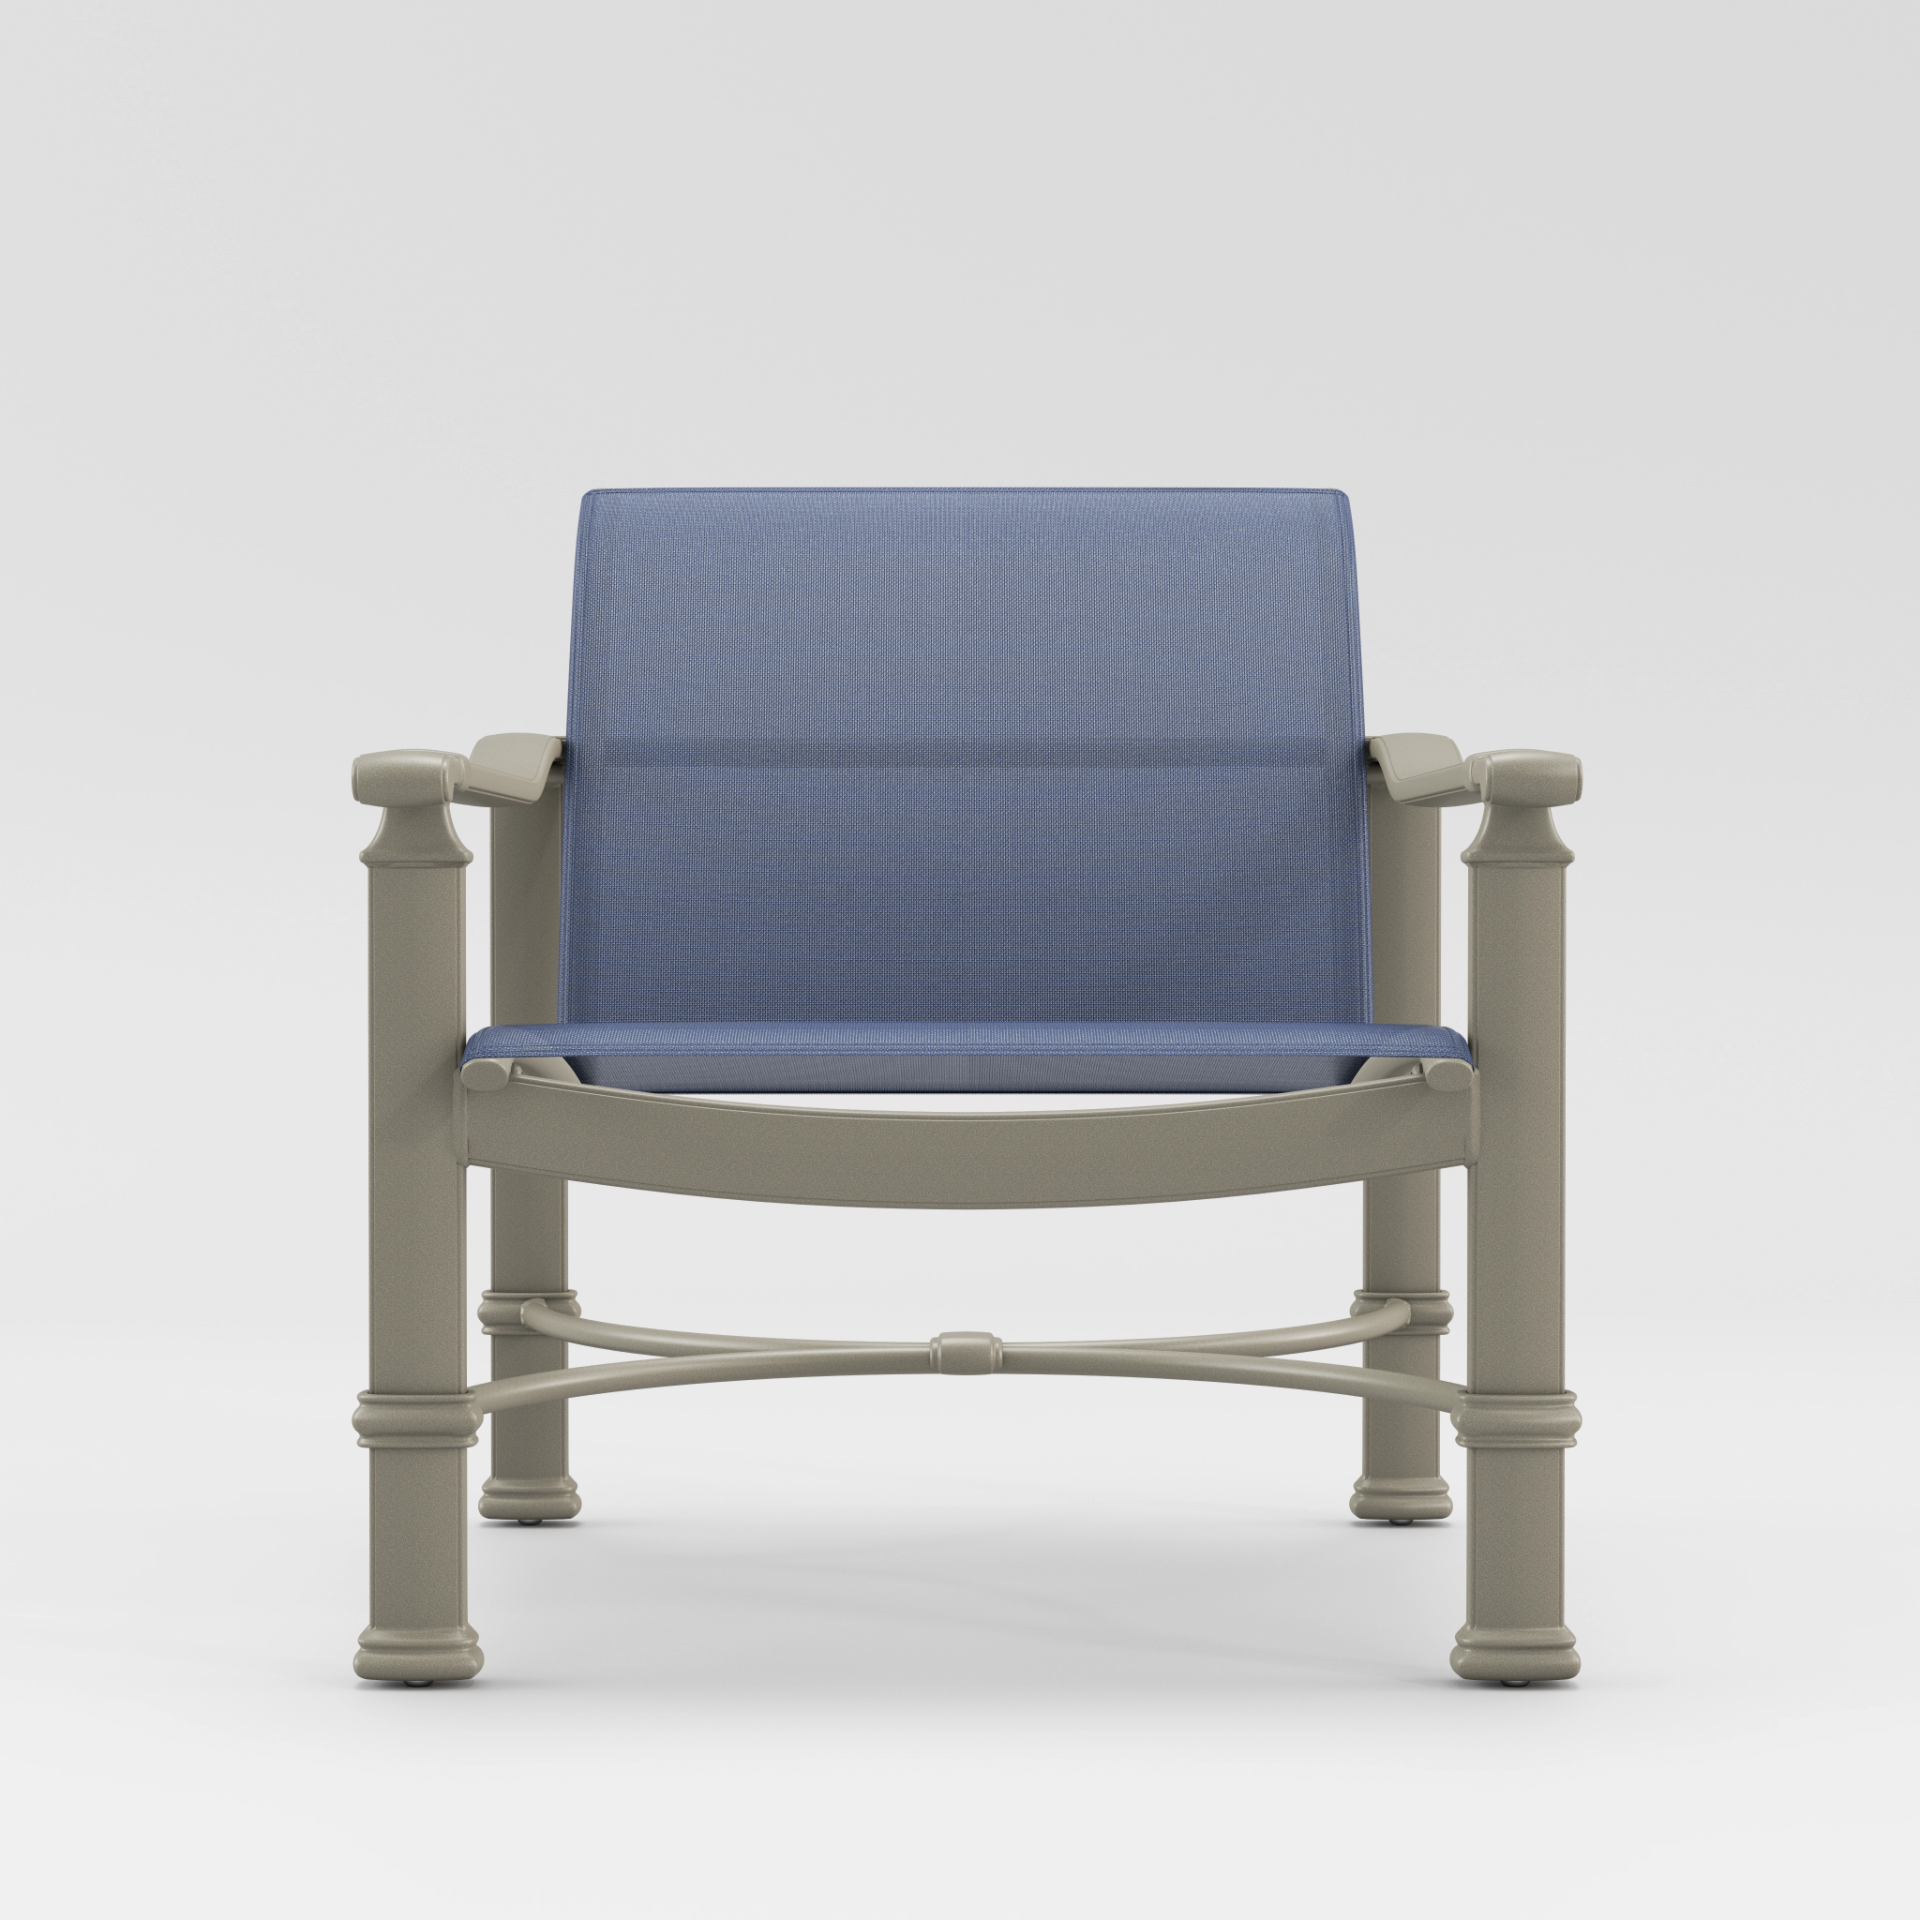 Fremont Sling Lounge Chair by Brown Jordan